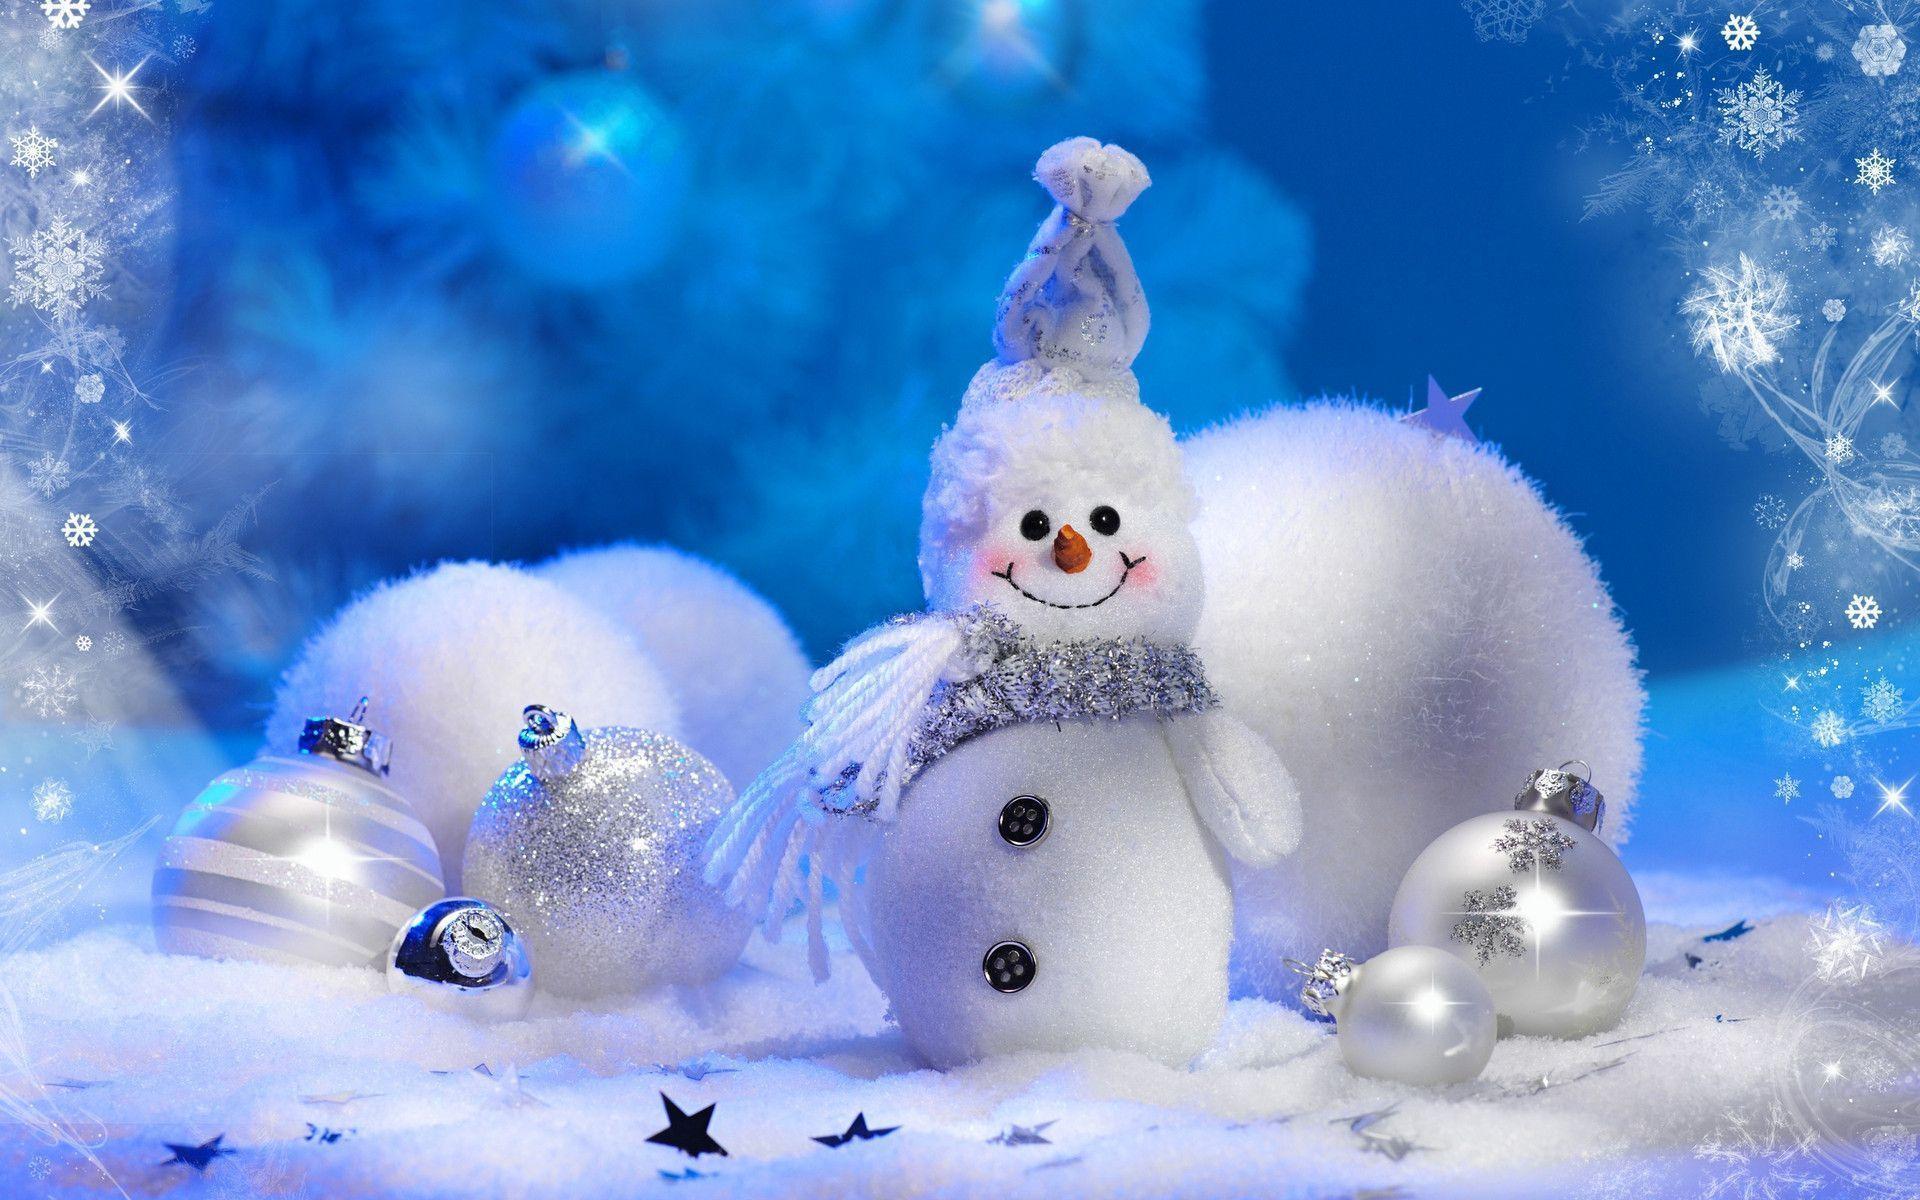 Cute Snowman Desktop wallpaper hd, Snow HD Wallpaper For Desktop